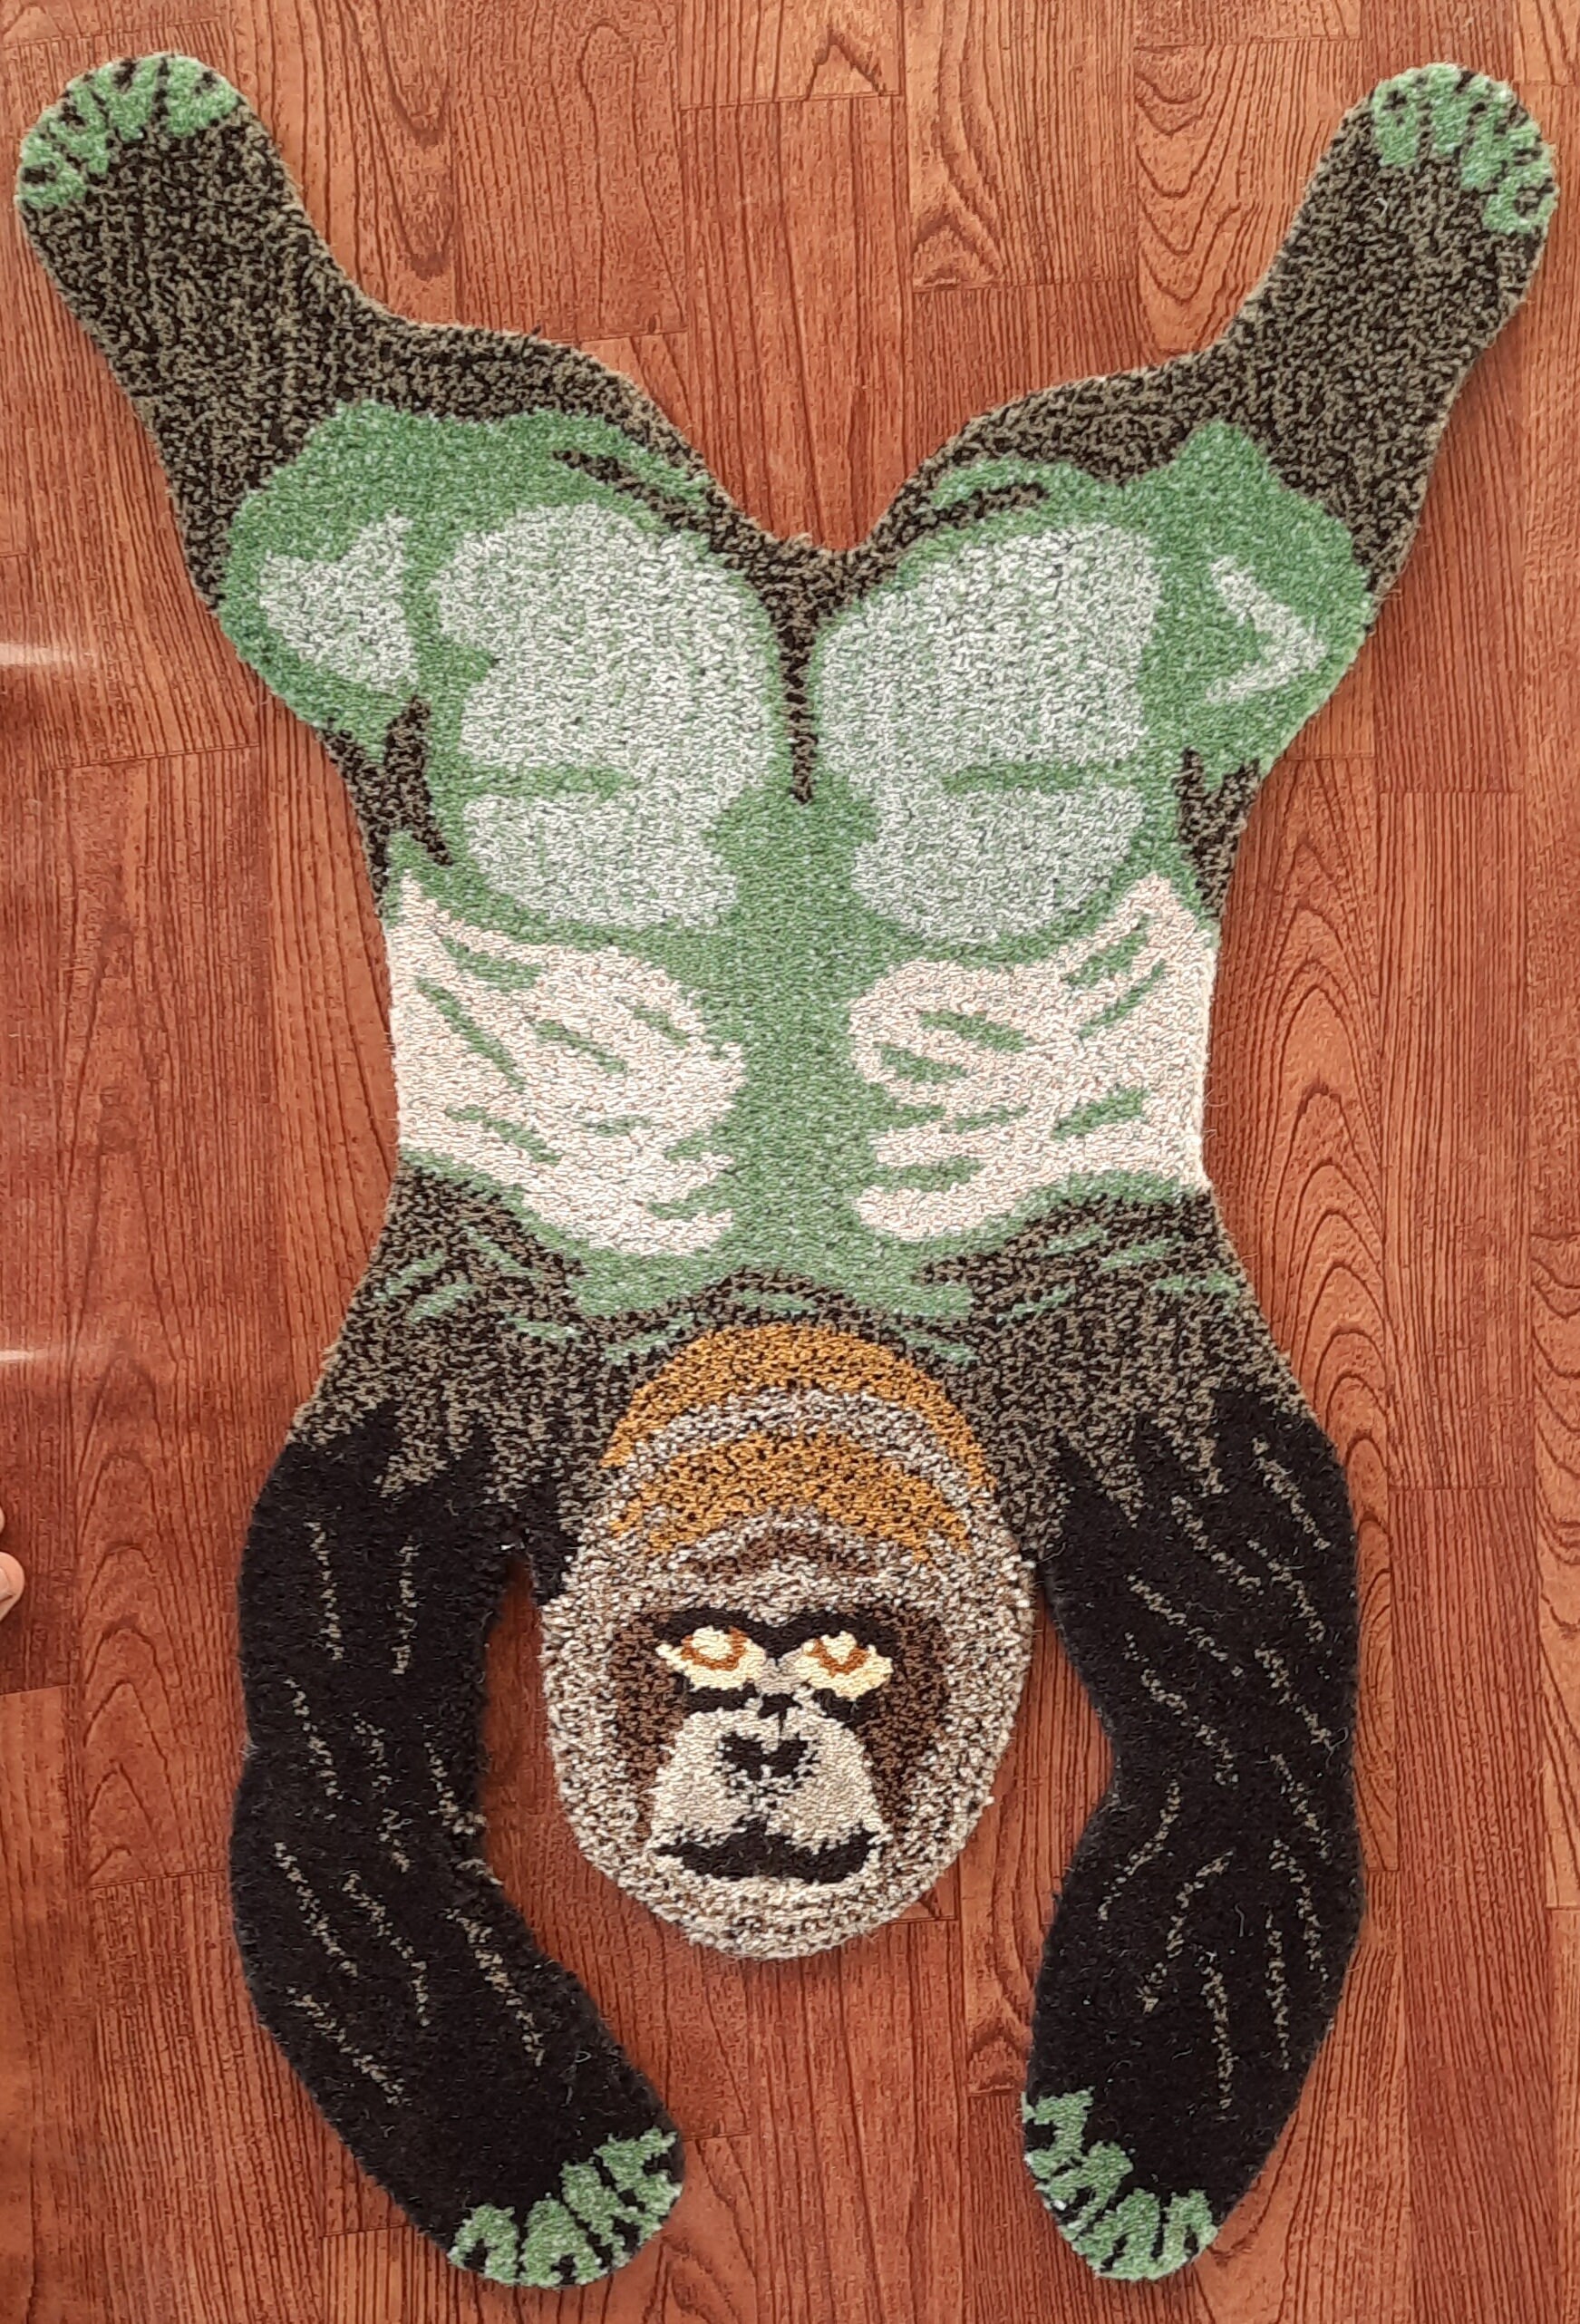 Hand Tufted Groovy Gorilla Rug 3x5 Feet 100 % Woolen Hand Tufted